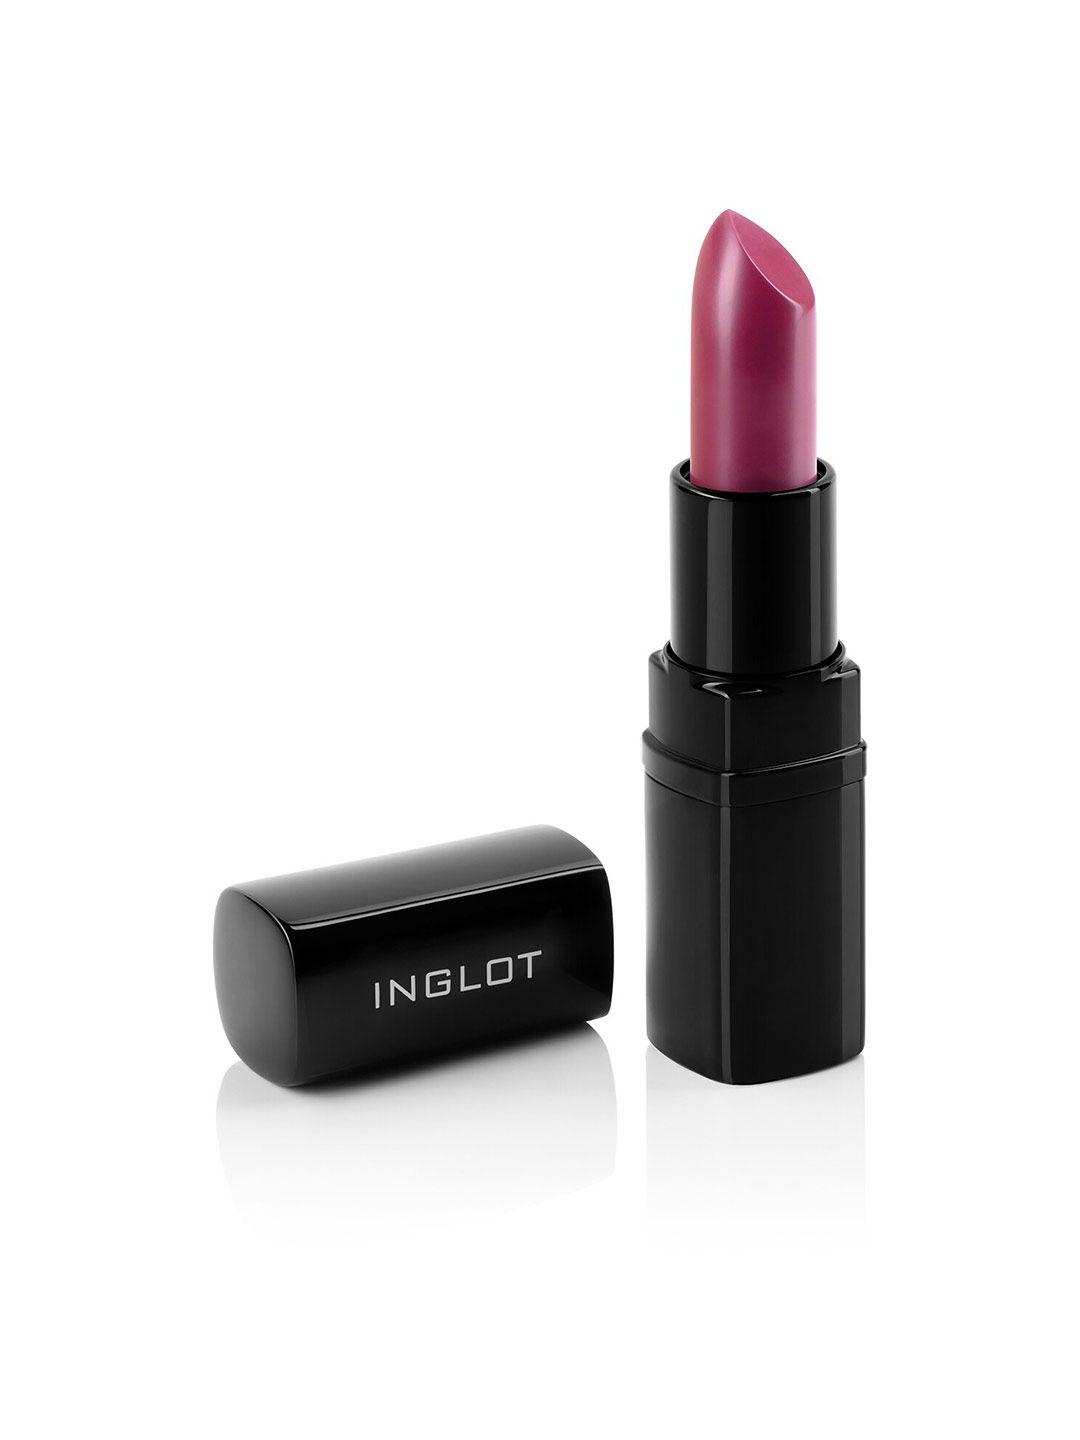 inglot classy matte lipstick enriched with vitamin e - 419